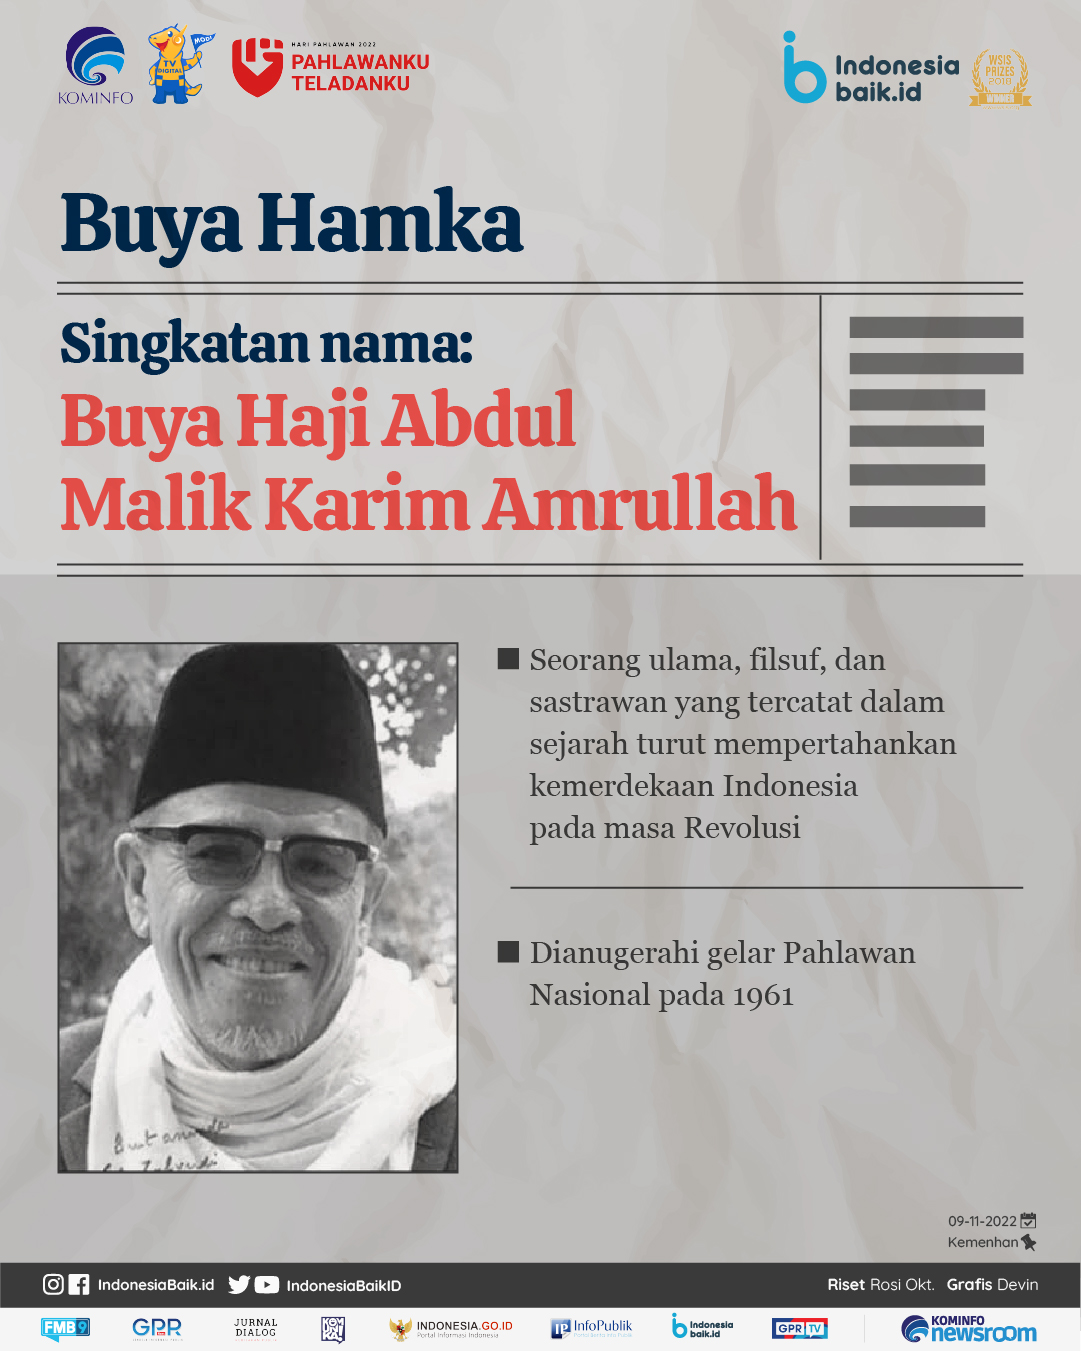 Buya Hamka adalah sastrawan Indonesia